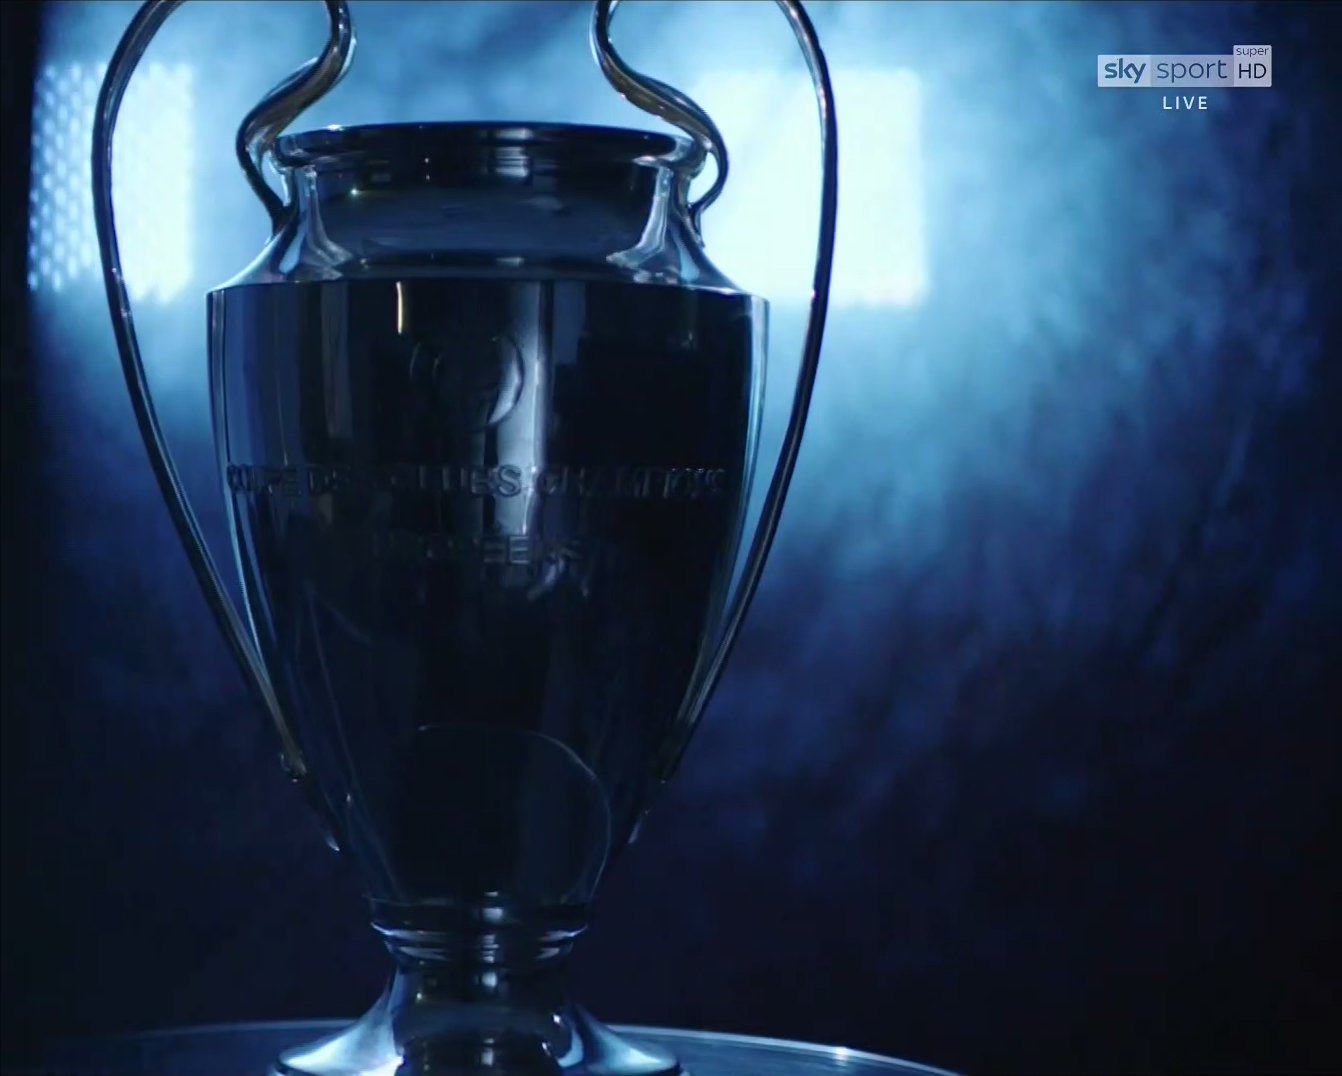 Sky Sport Champions Ottavi #4, Diretta Esclusiva | Palinsesto e Telecronisti #JuveAtleti